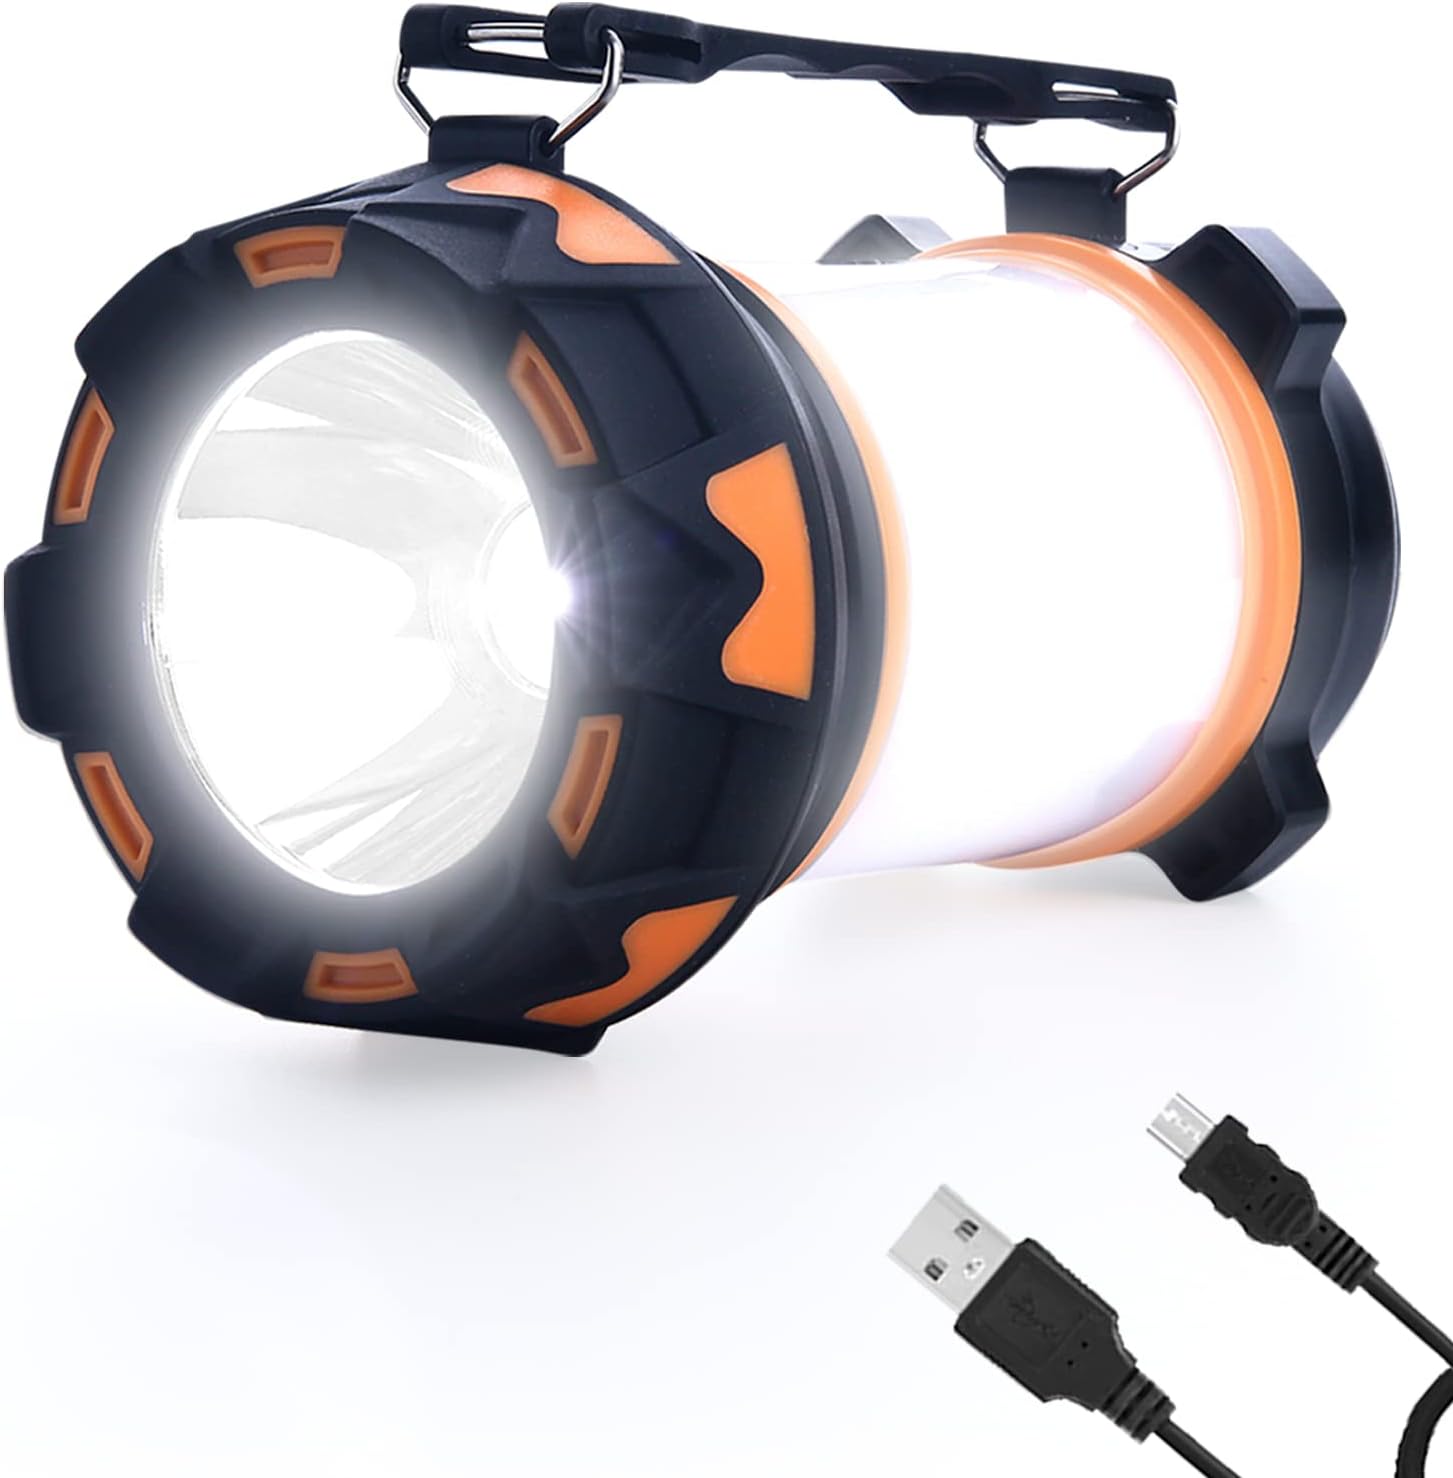 AYL LED Camping Lantern Rechargeable, Super Bright Lantern Flashlight and 360 Degree Illumination, Power Bank, IPX4 Waterproof for